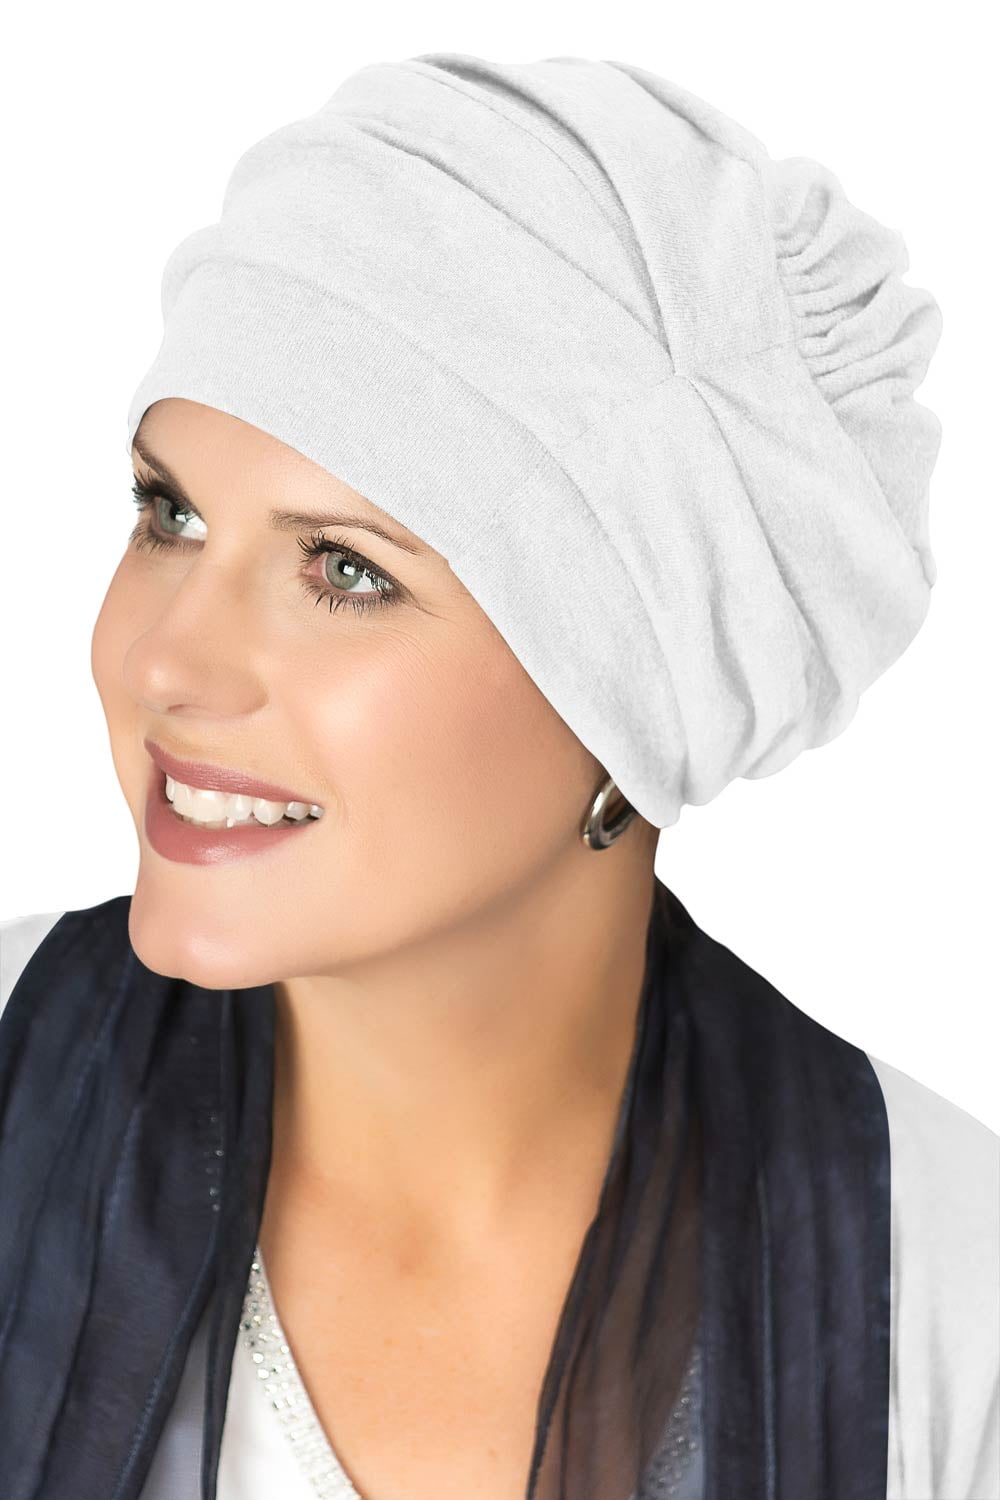 Chemotherapy Headwear Cancer Turban Peach Sleep Cap Alopecia Hair Loss Hat Night Cap Light Weight Chemo Hat Beret Beanie